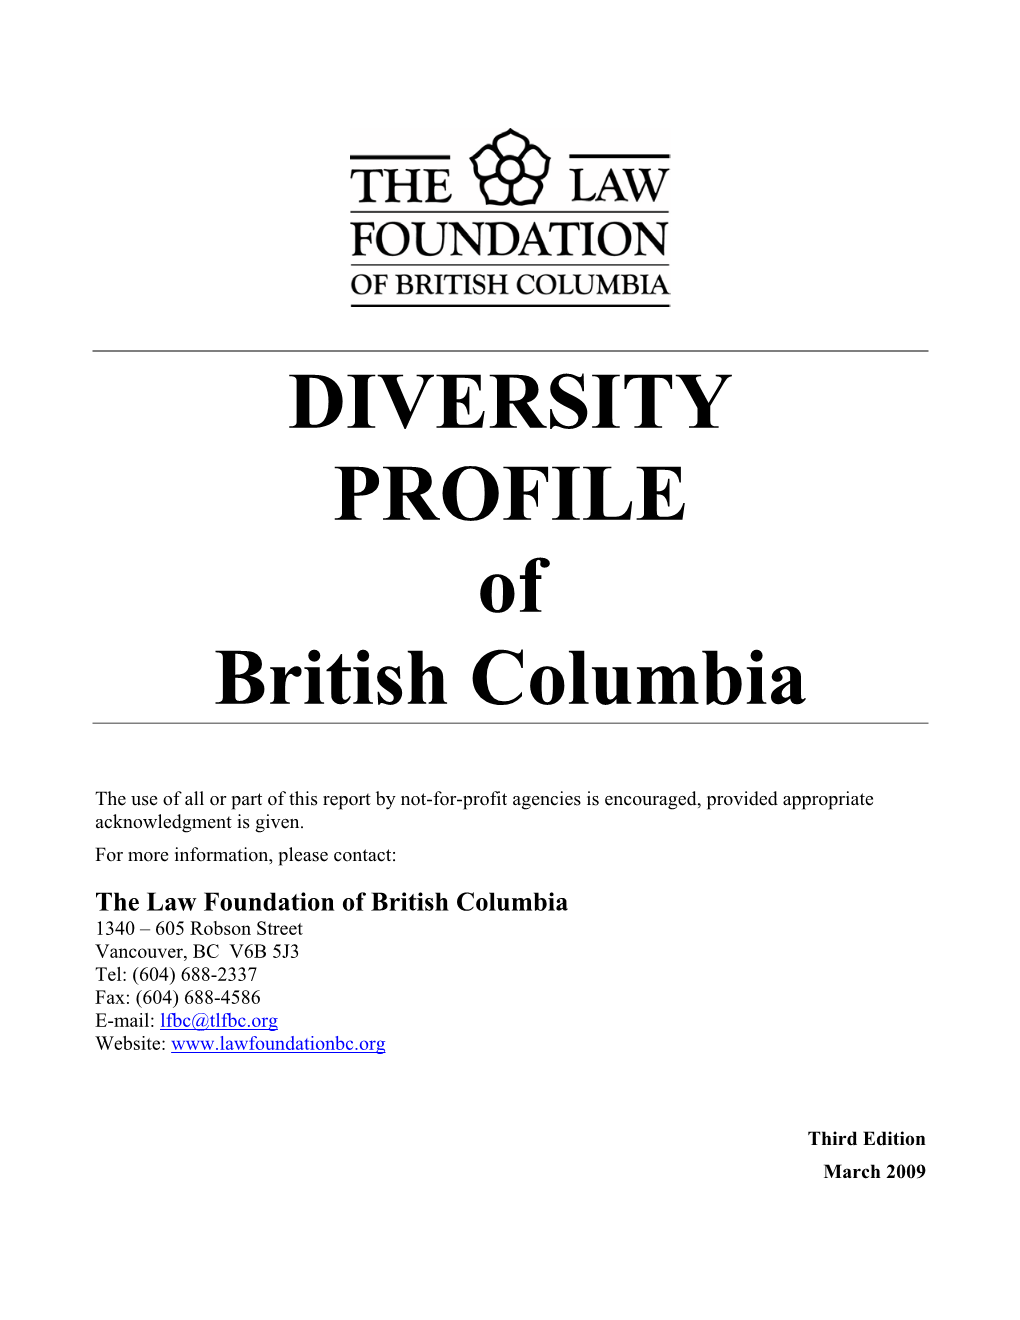 Diversity Profile of British Columbia, Third Edition